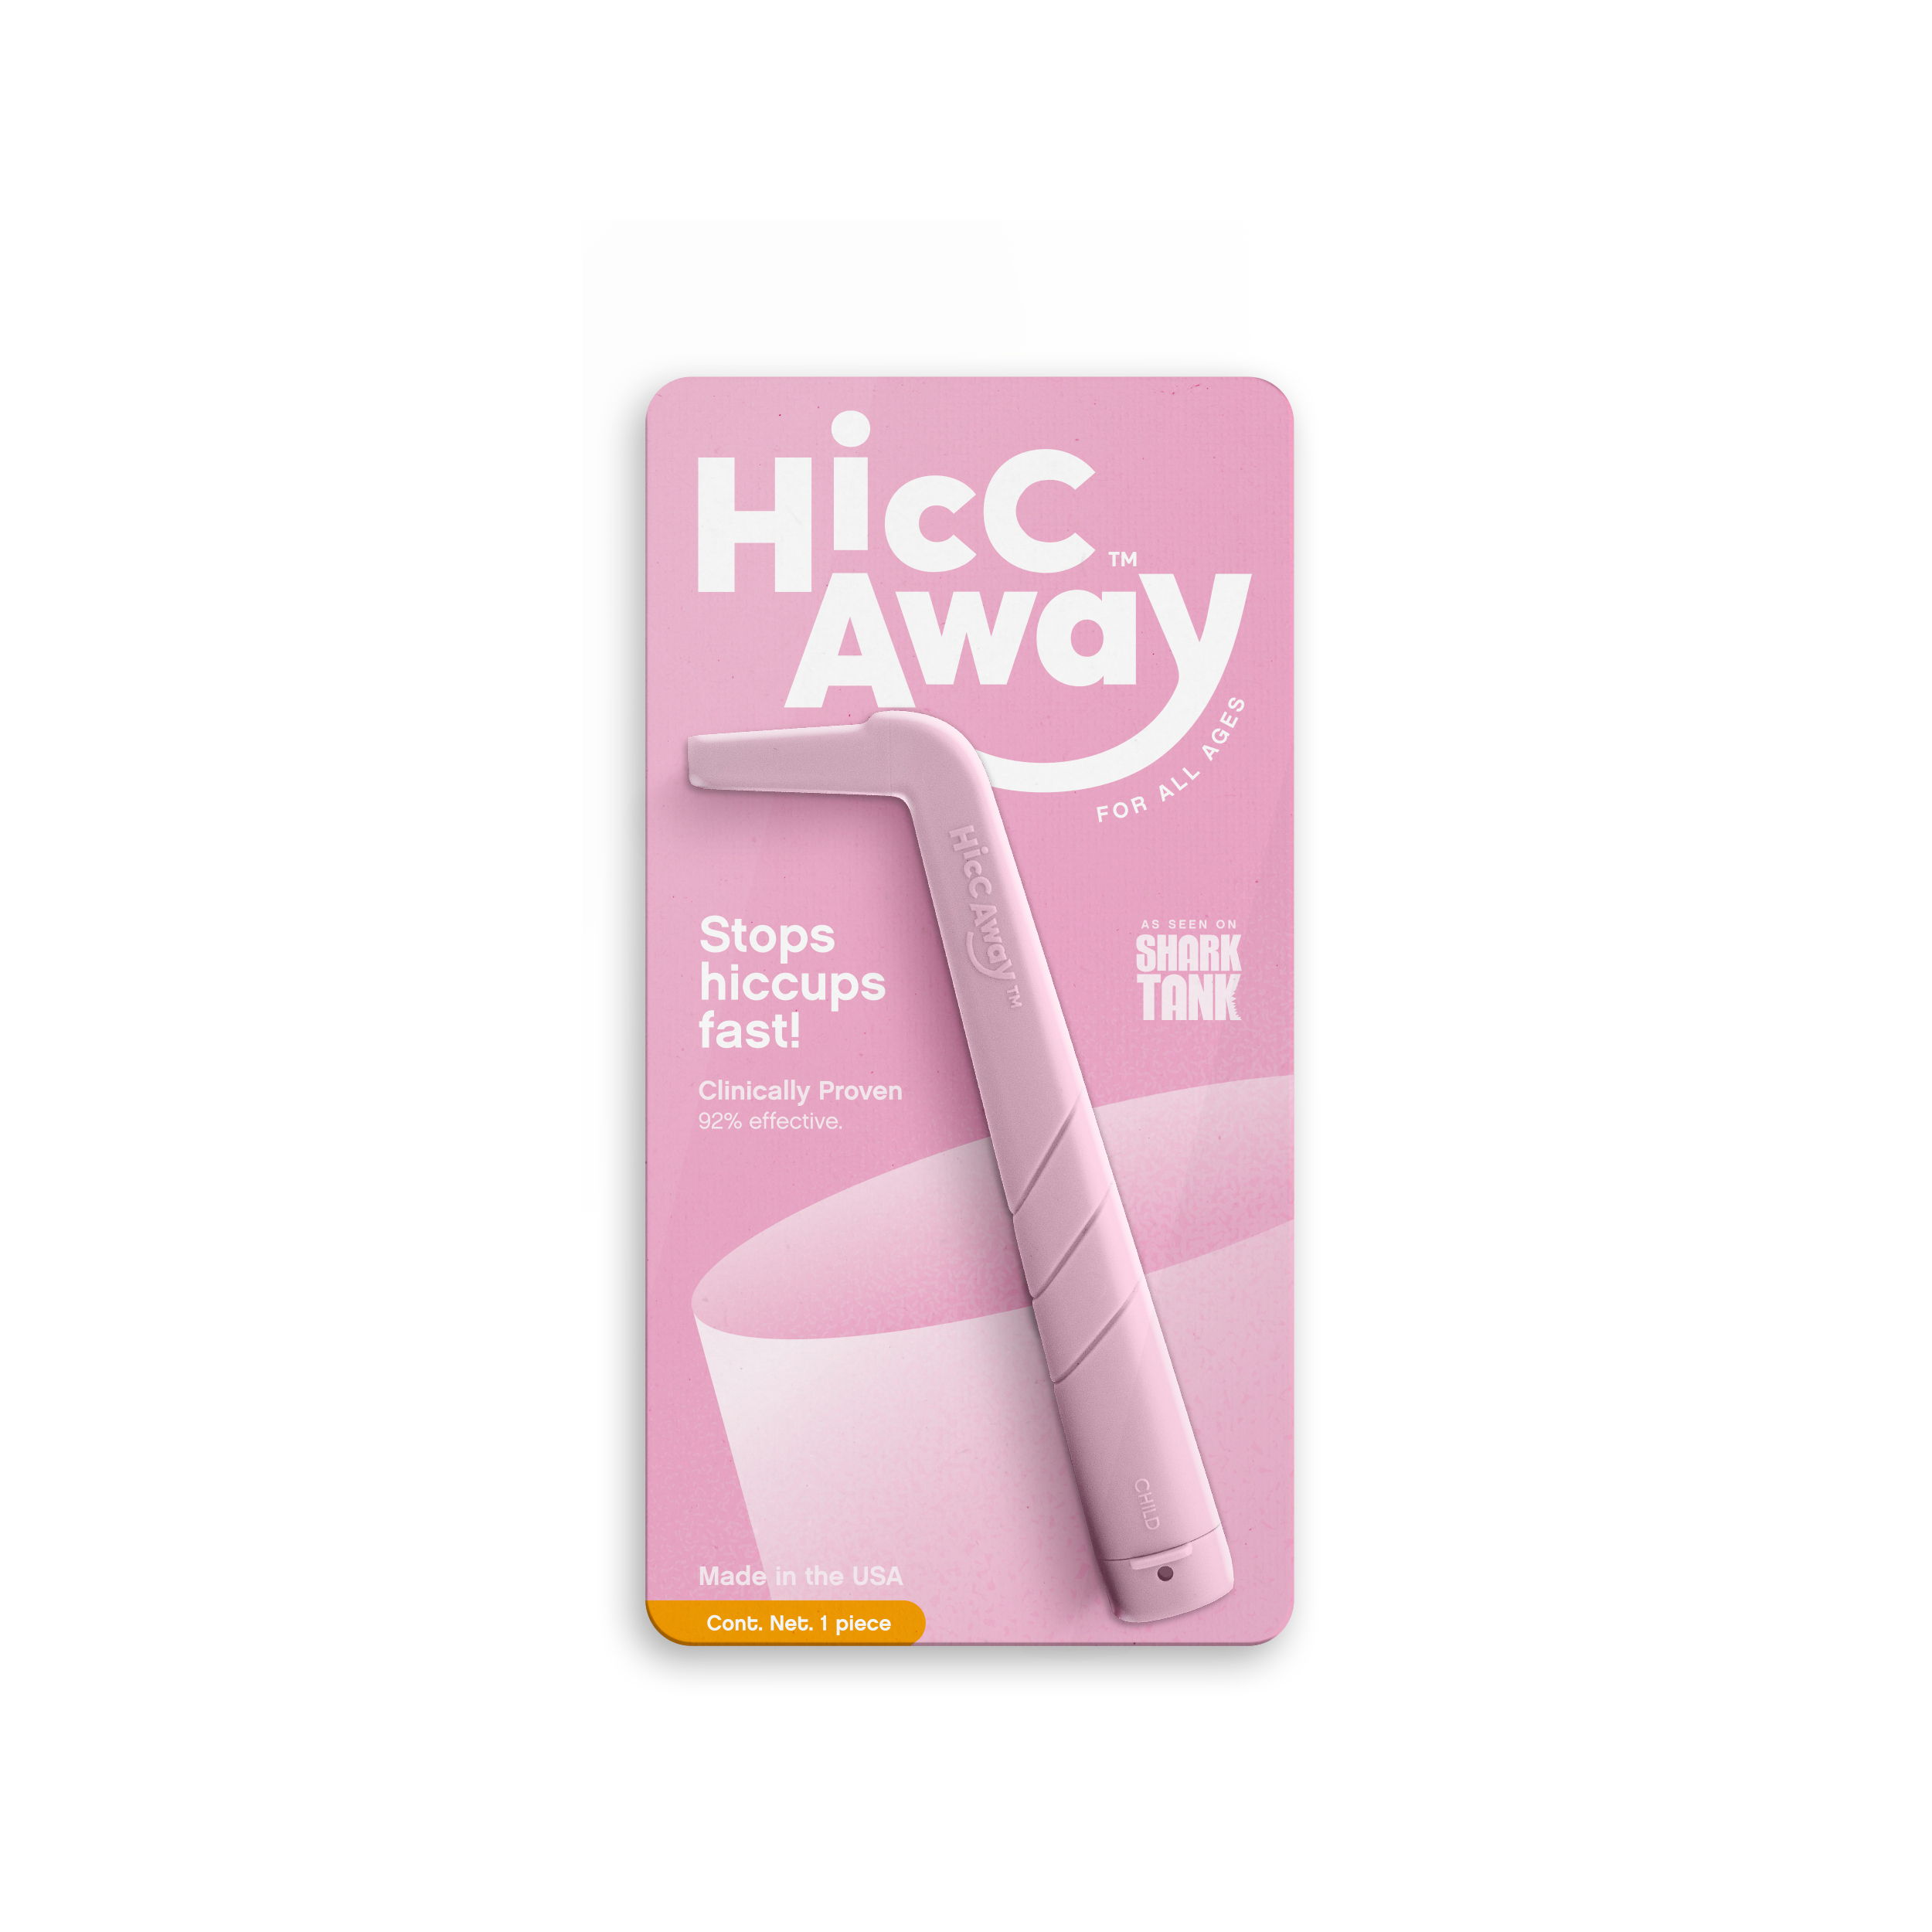 HiccAway Prism Pink